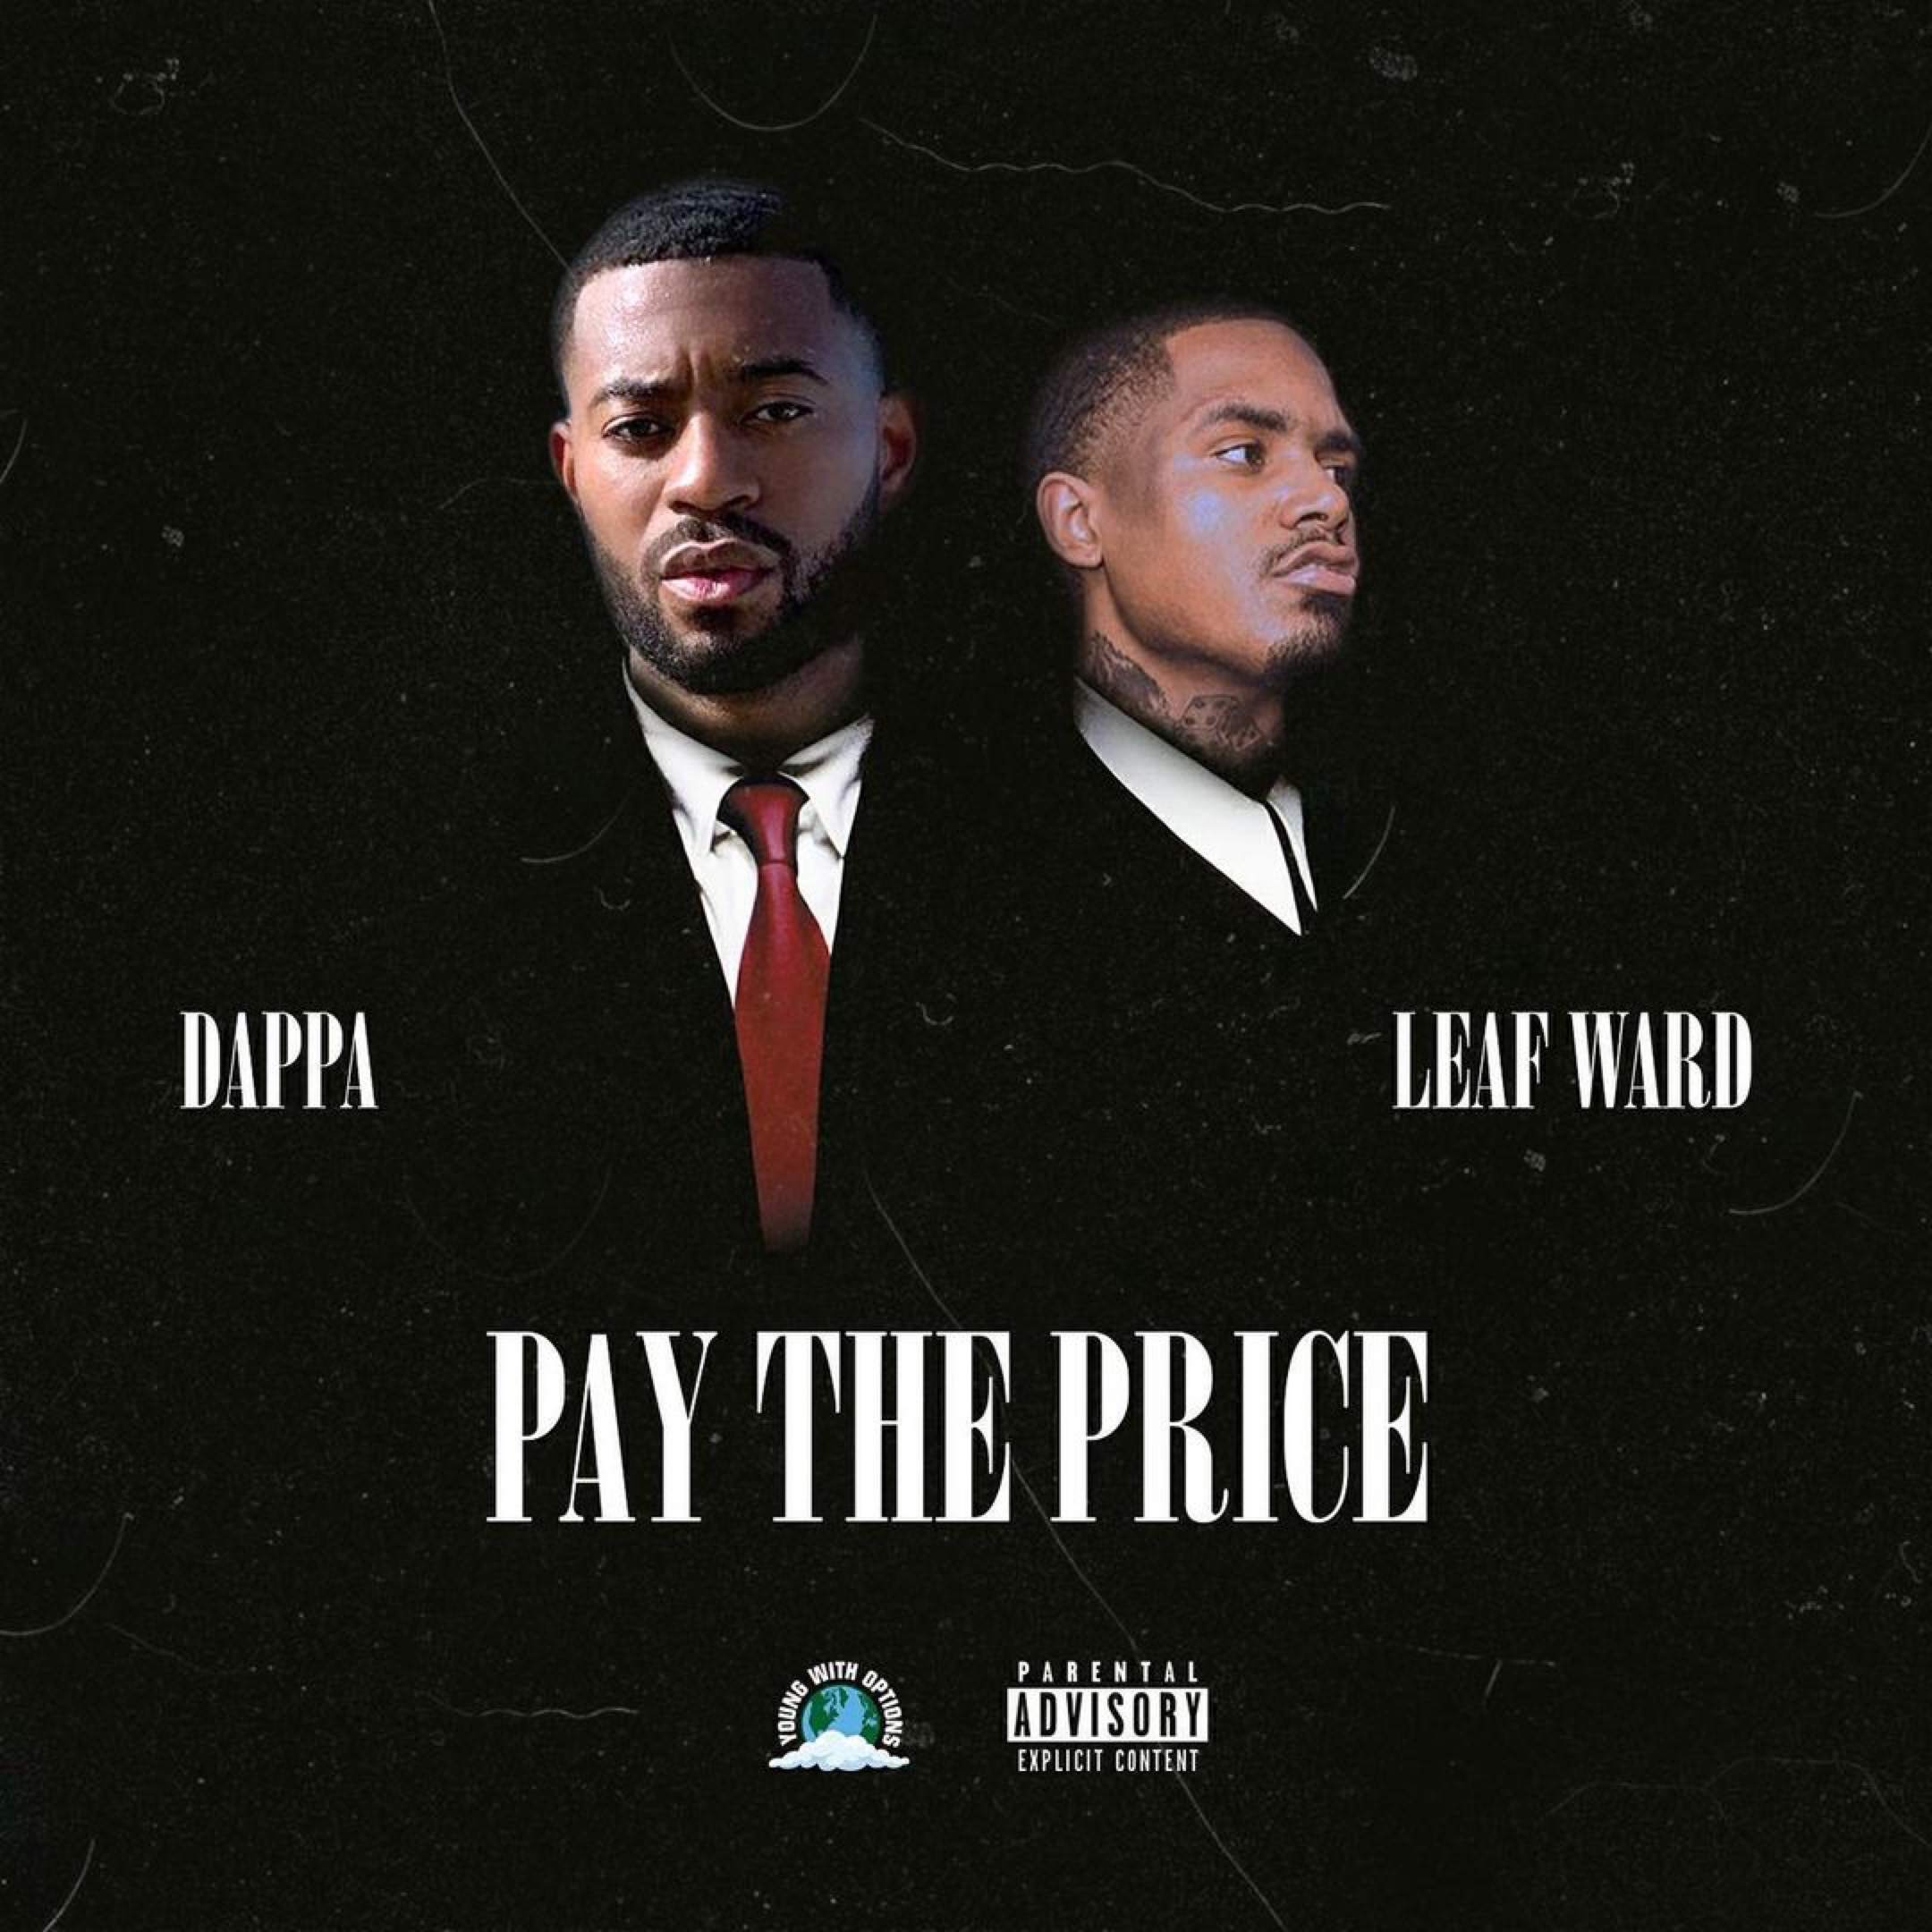 Dappa & Leaf Ward – “Pay the Price”